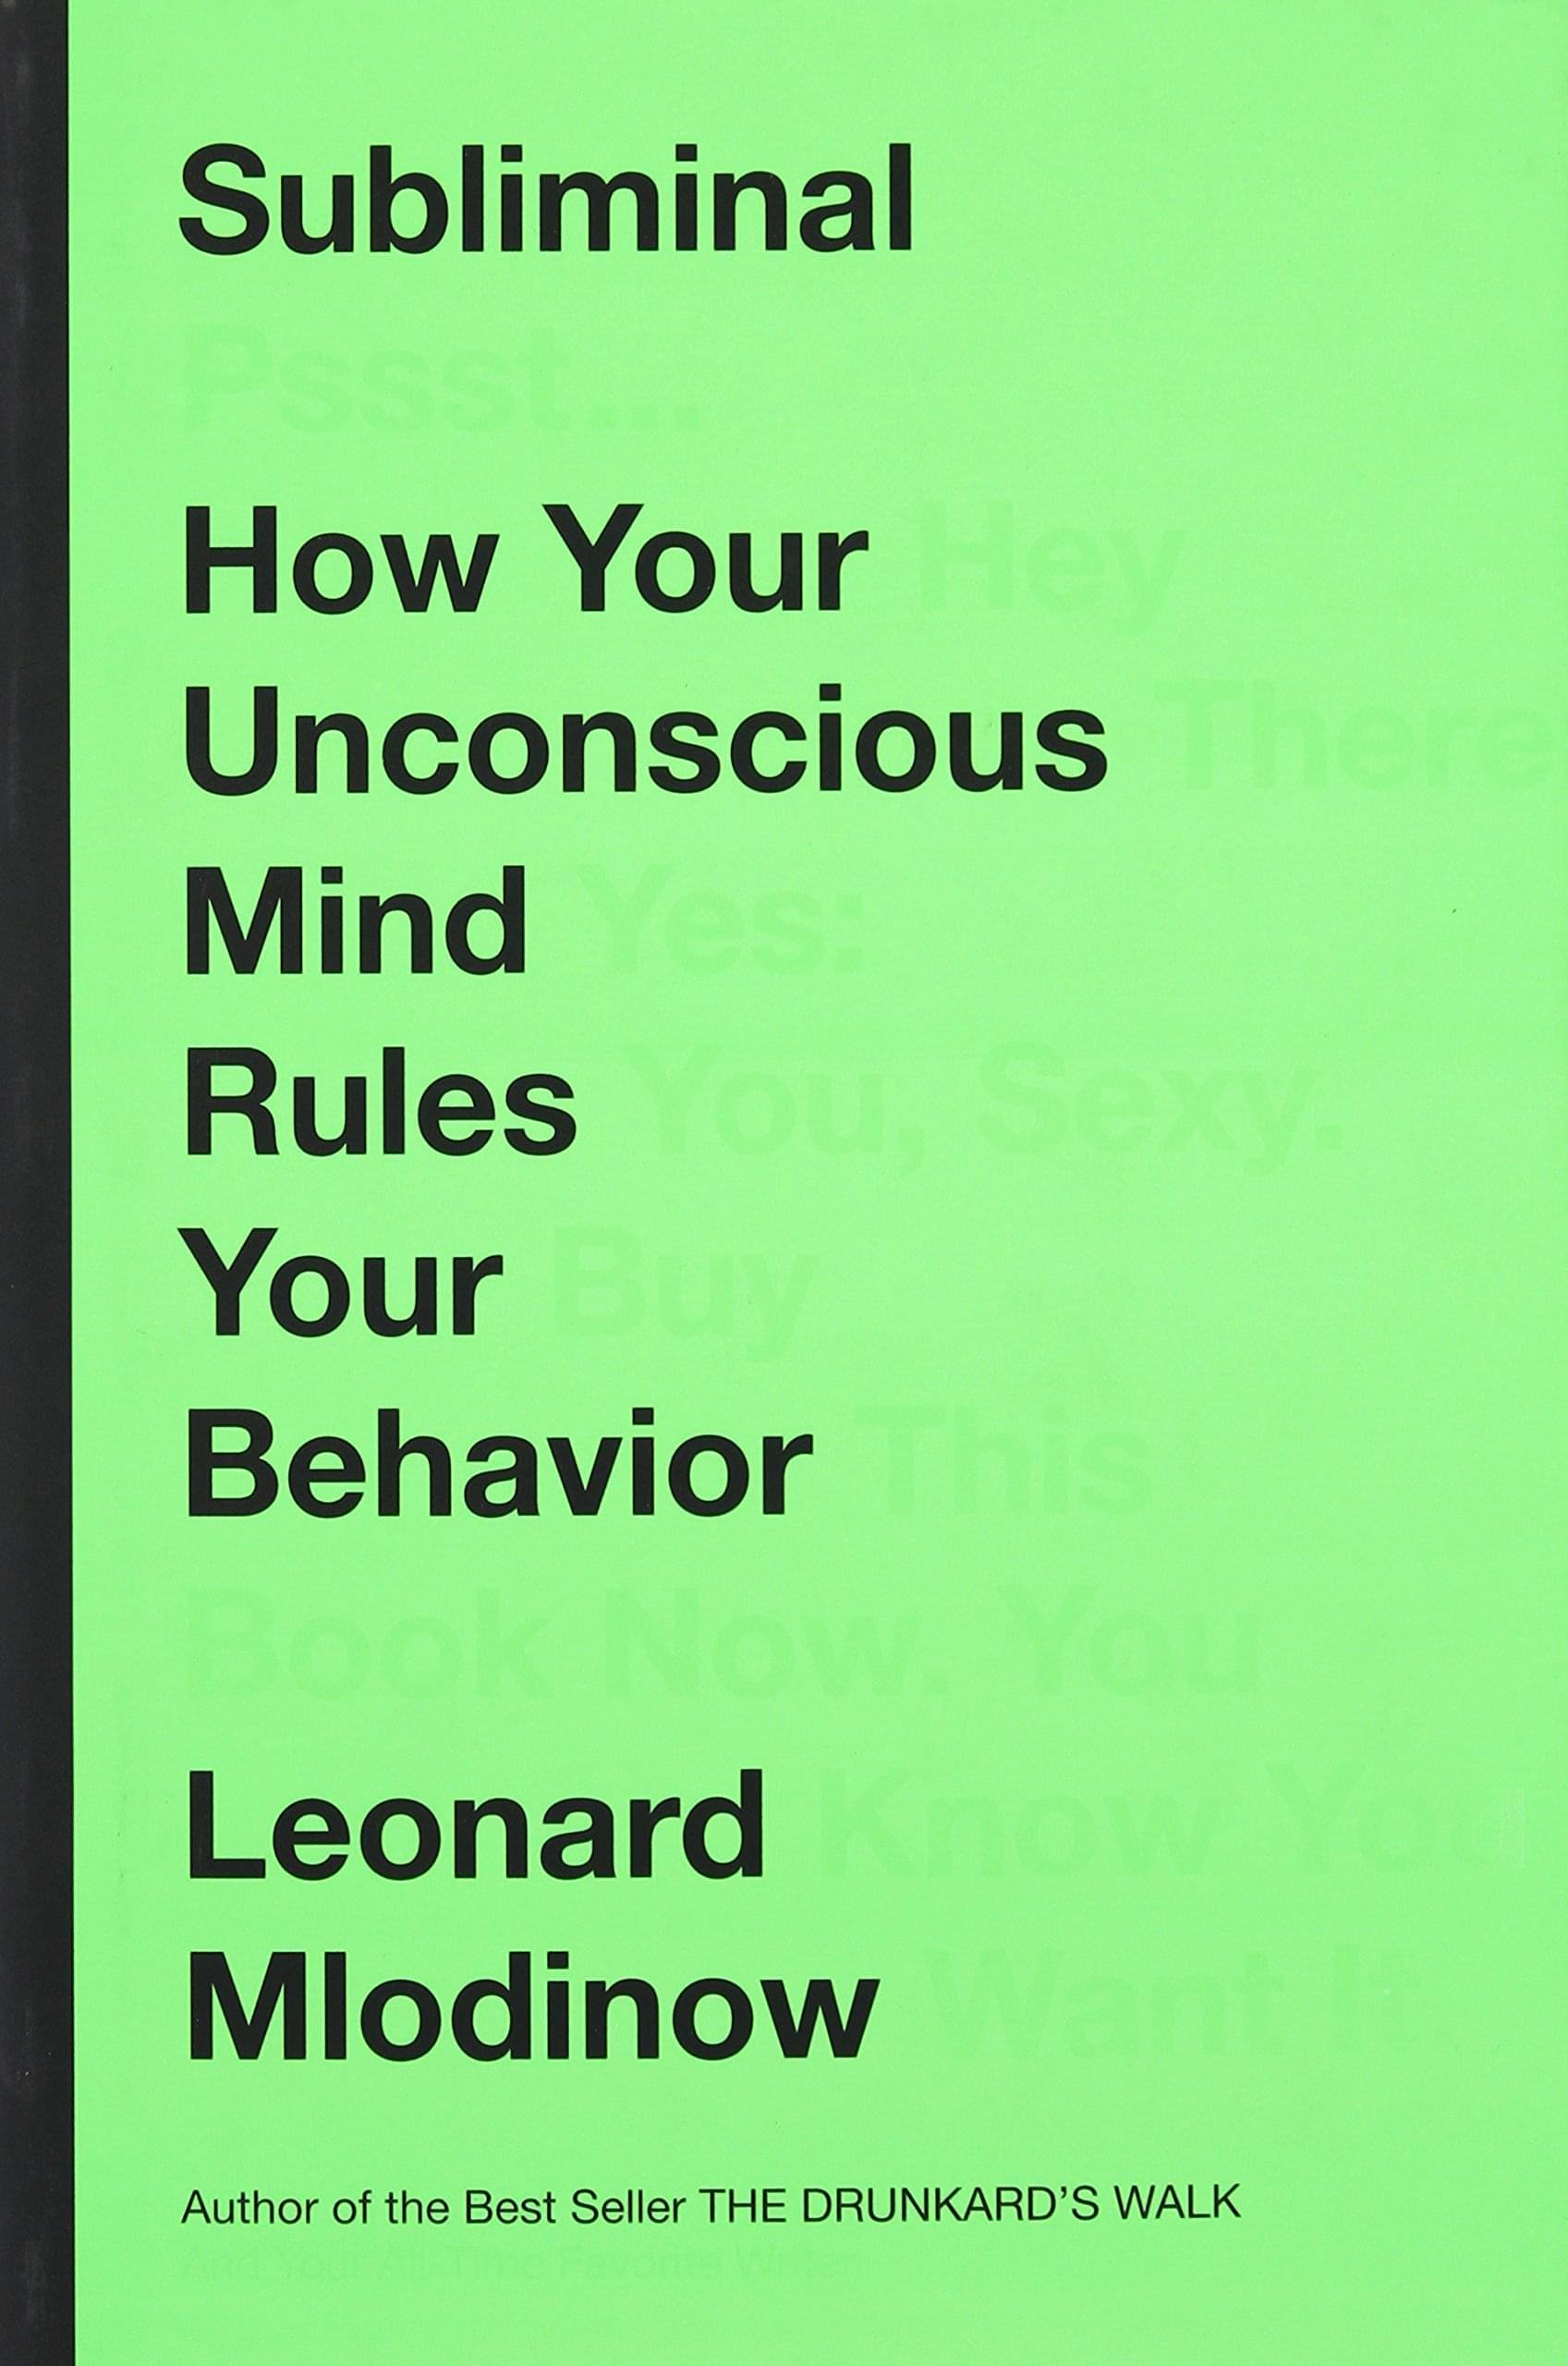 Misbehaving – The Making of Behavioral Economics, de Richard Thaler